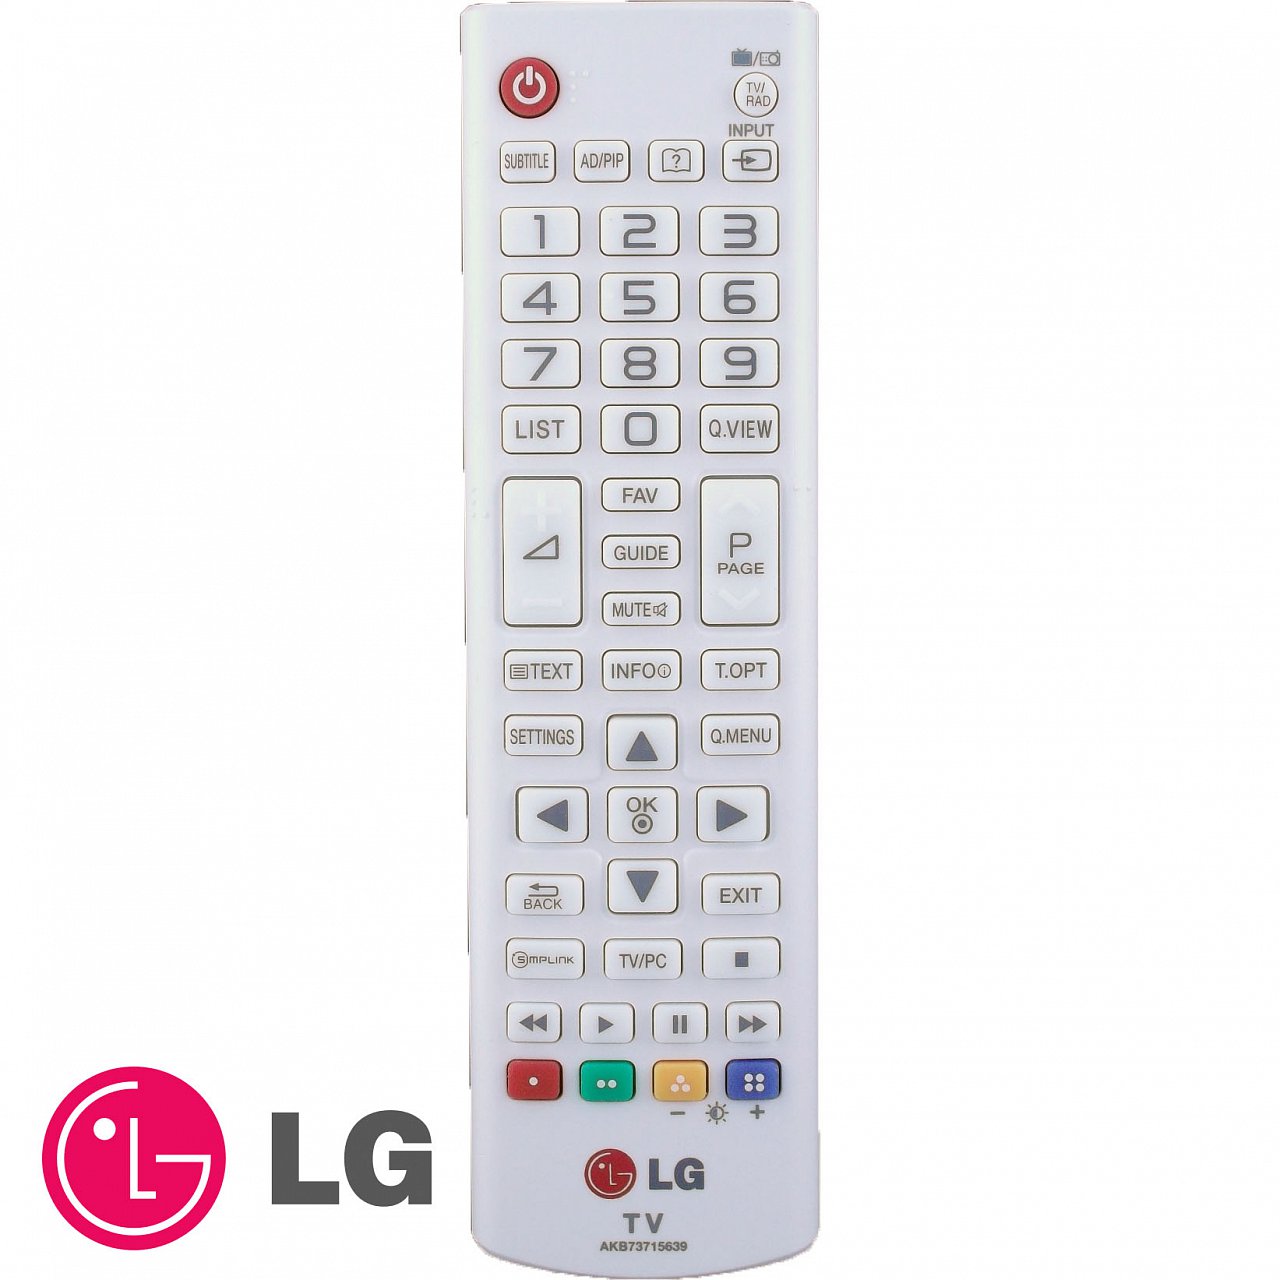 LG AKB73715639 was replaced by AKB73715603 original remote control black